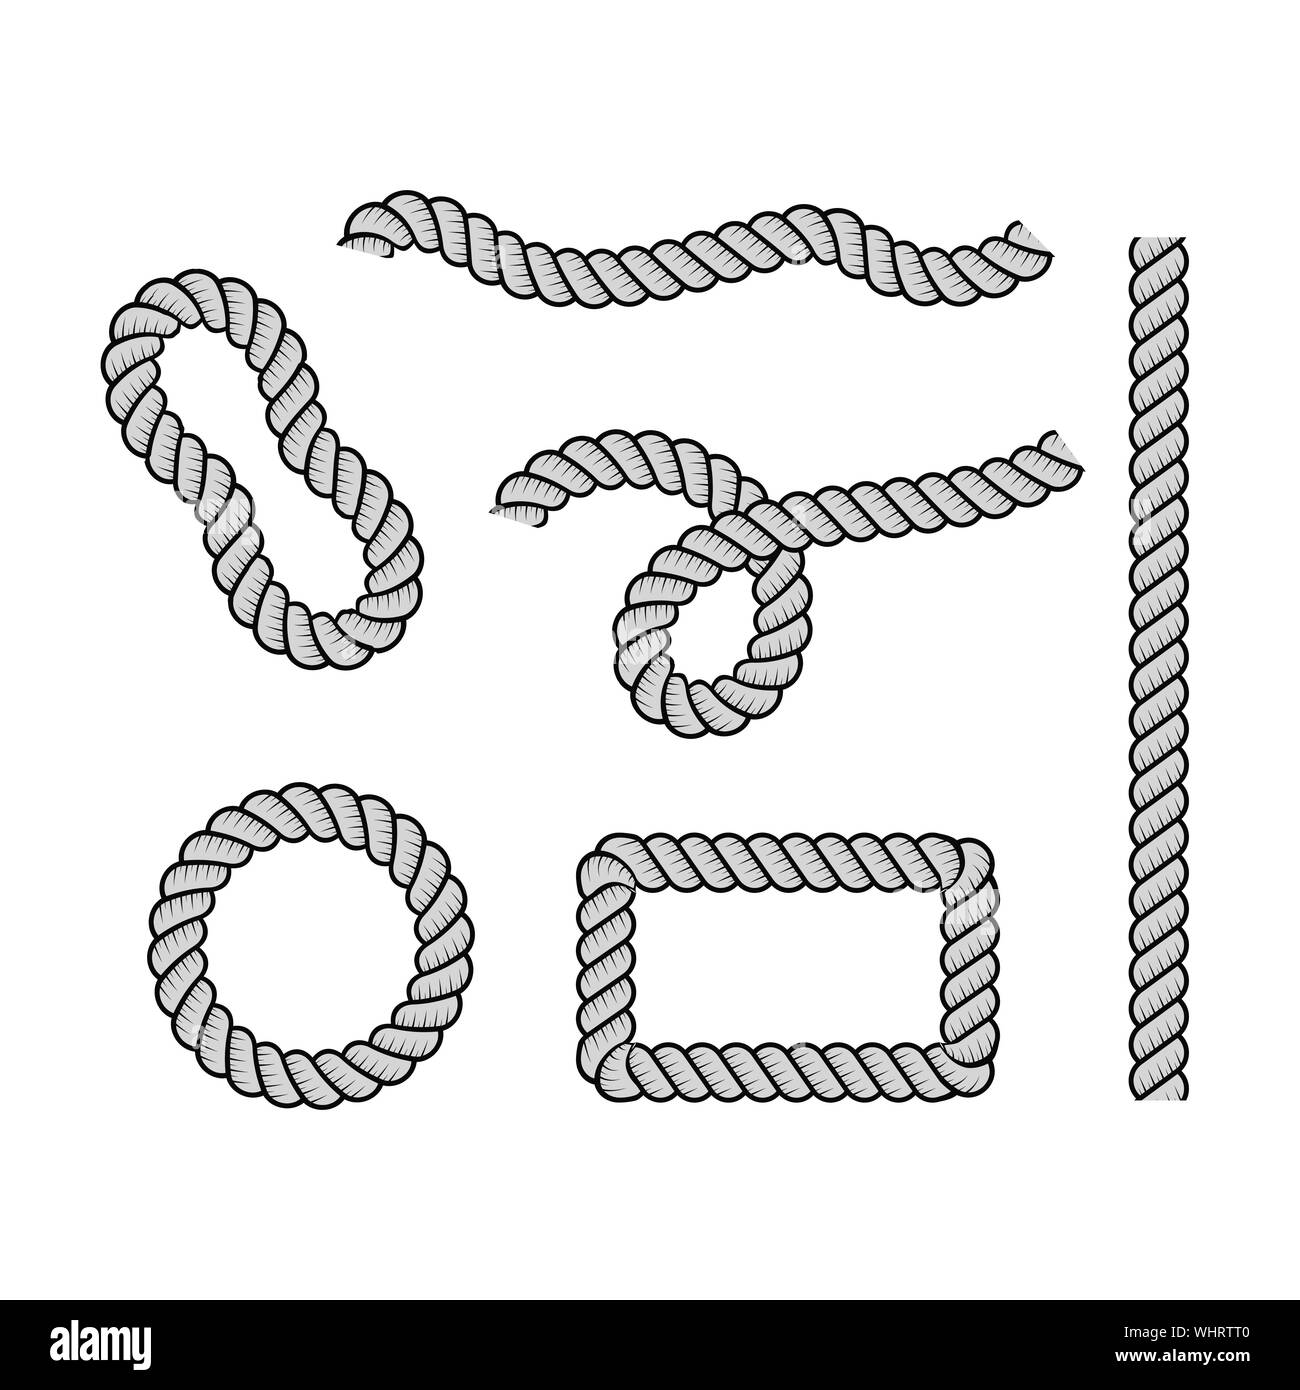 Rope knots borders line set design element different types. vector